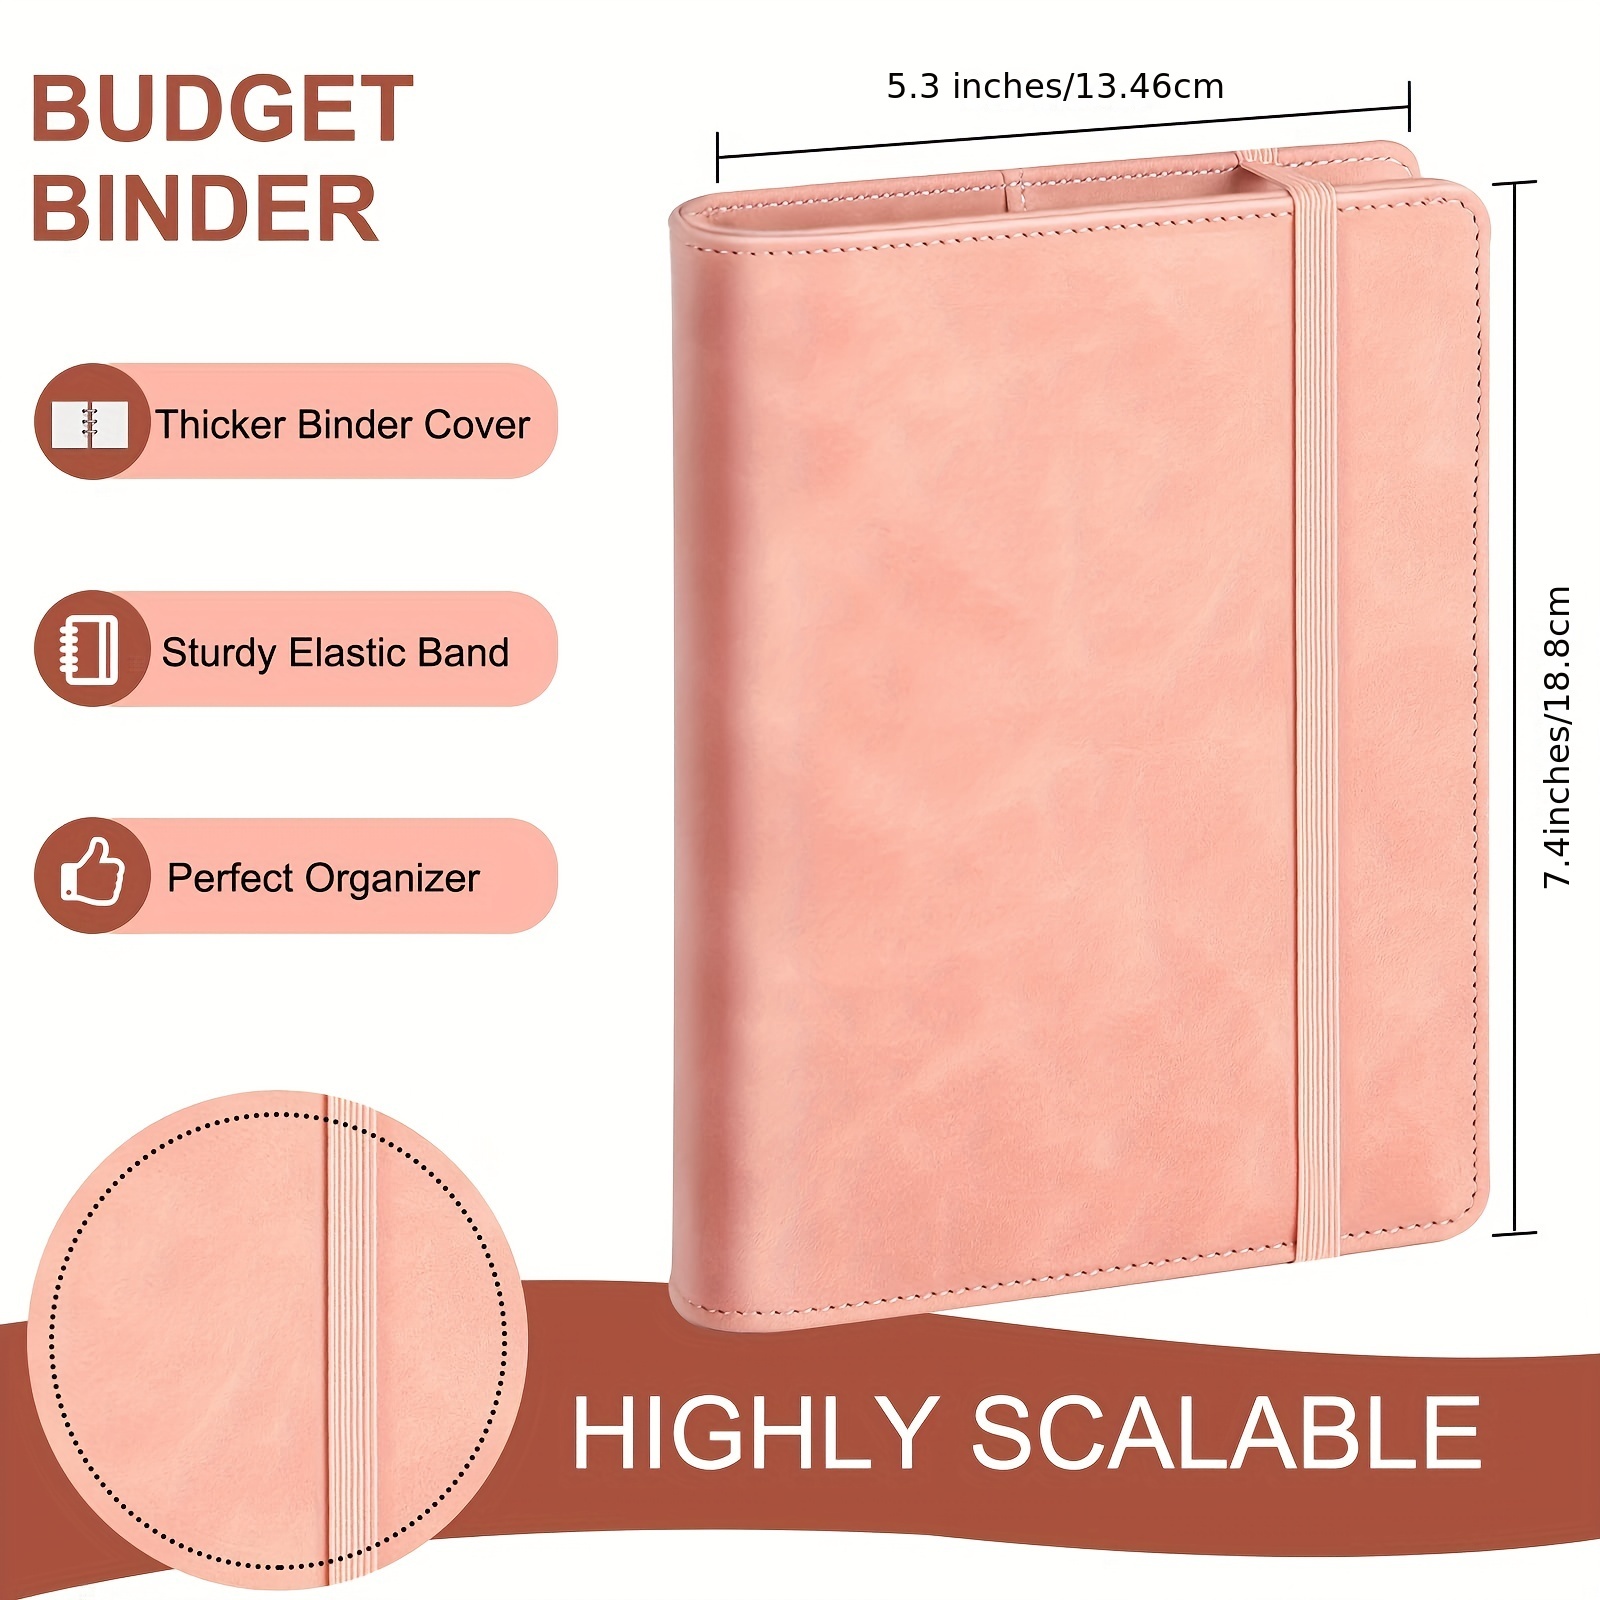 Custom PU Leather Budget Binder With 10pcs Zipper Envelopes